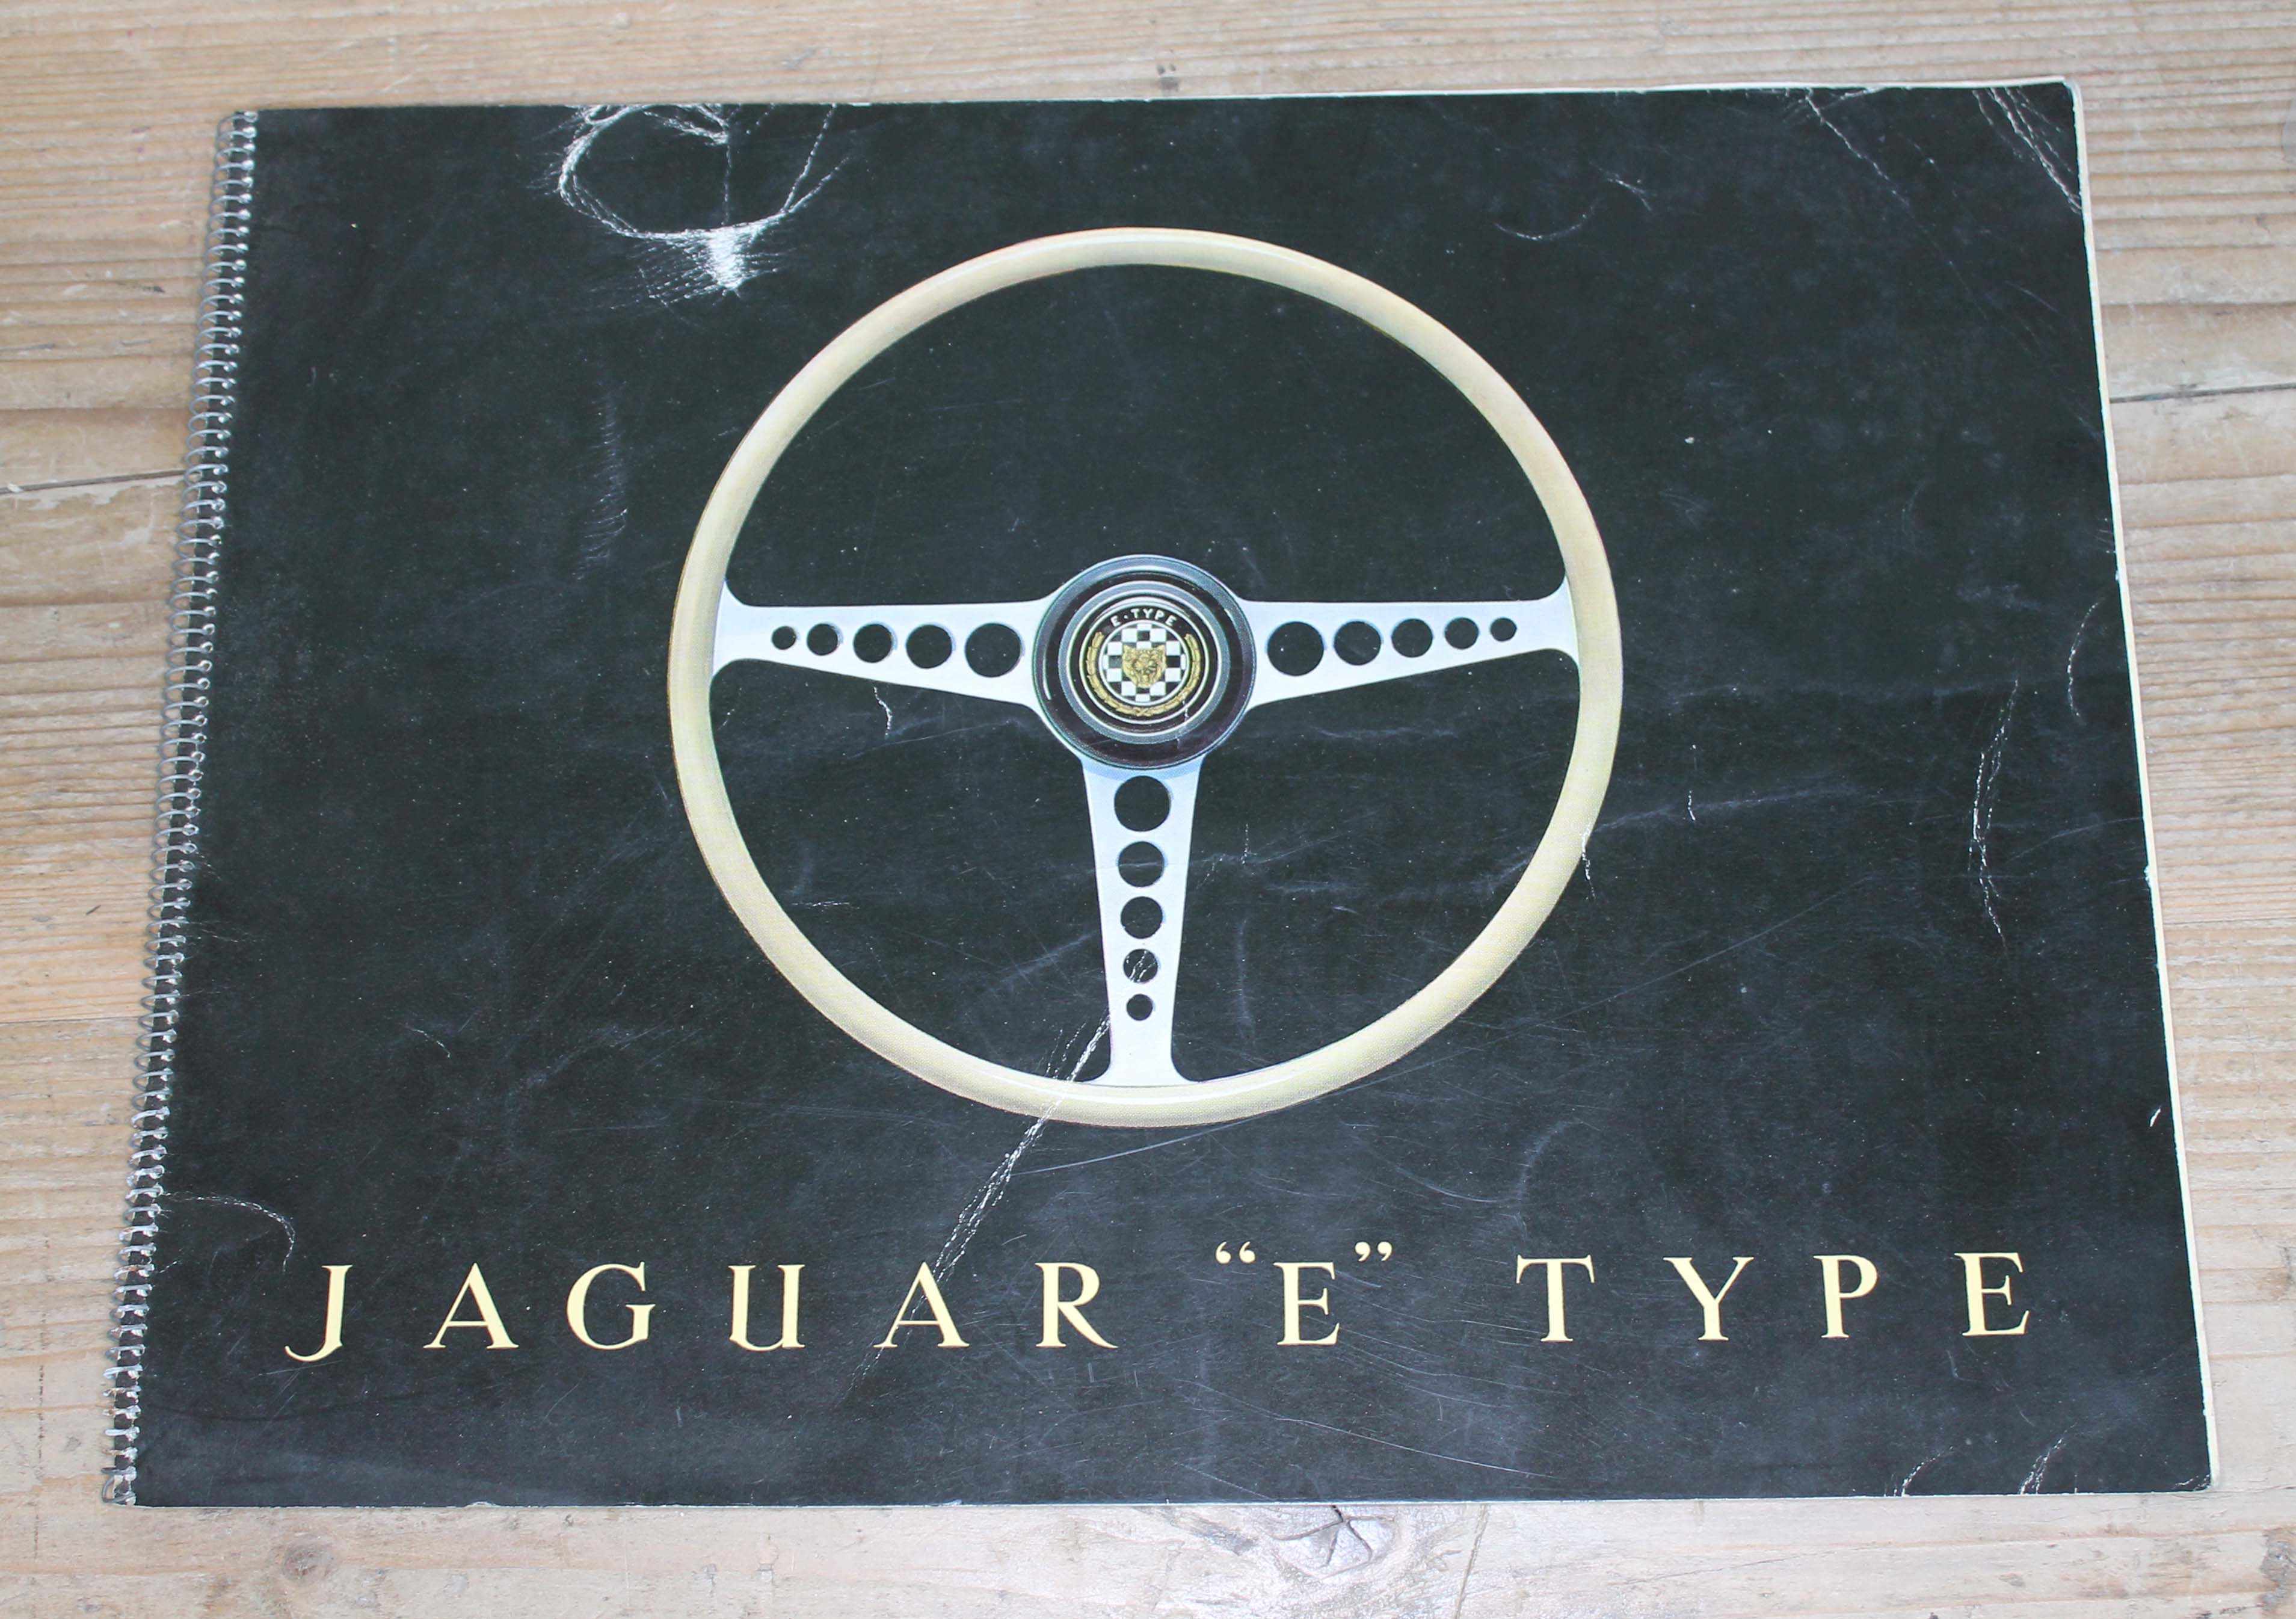 An original 1960's E type Jaguar sales brochure.